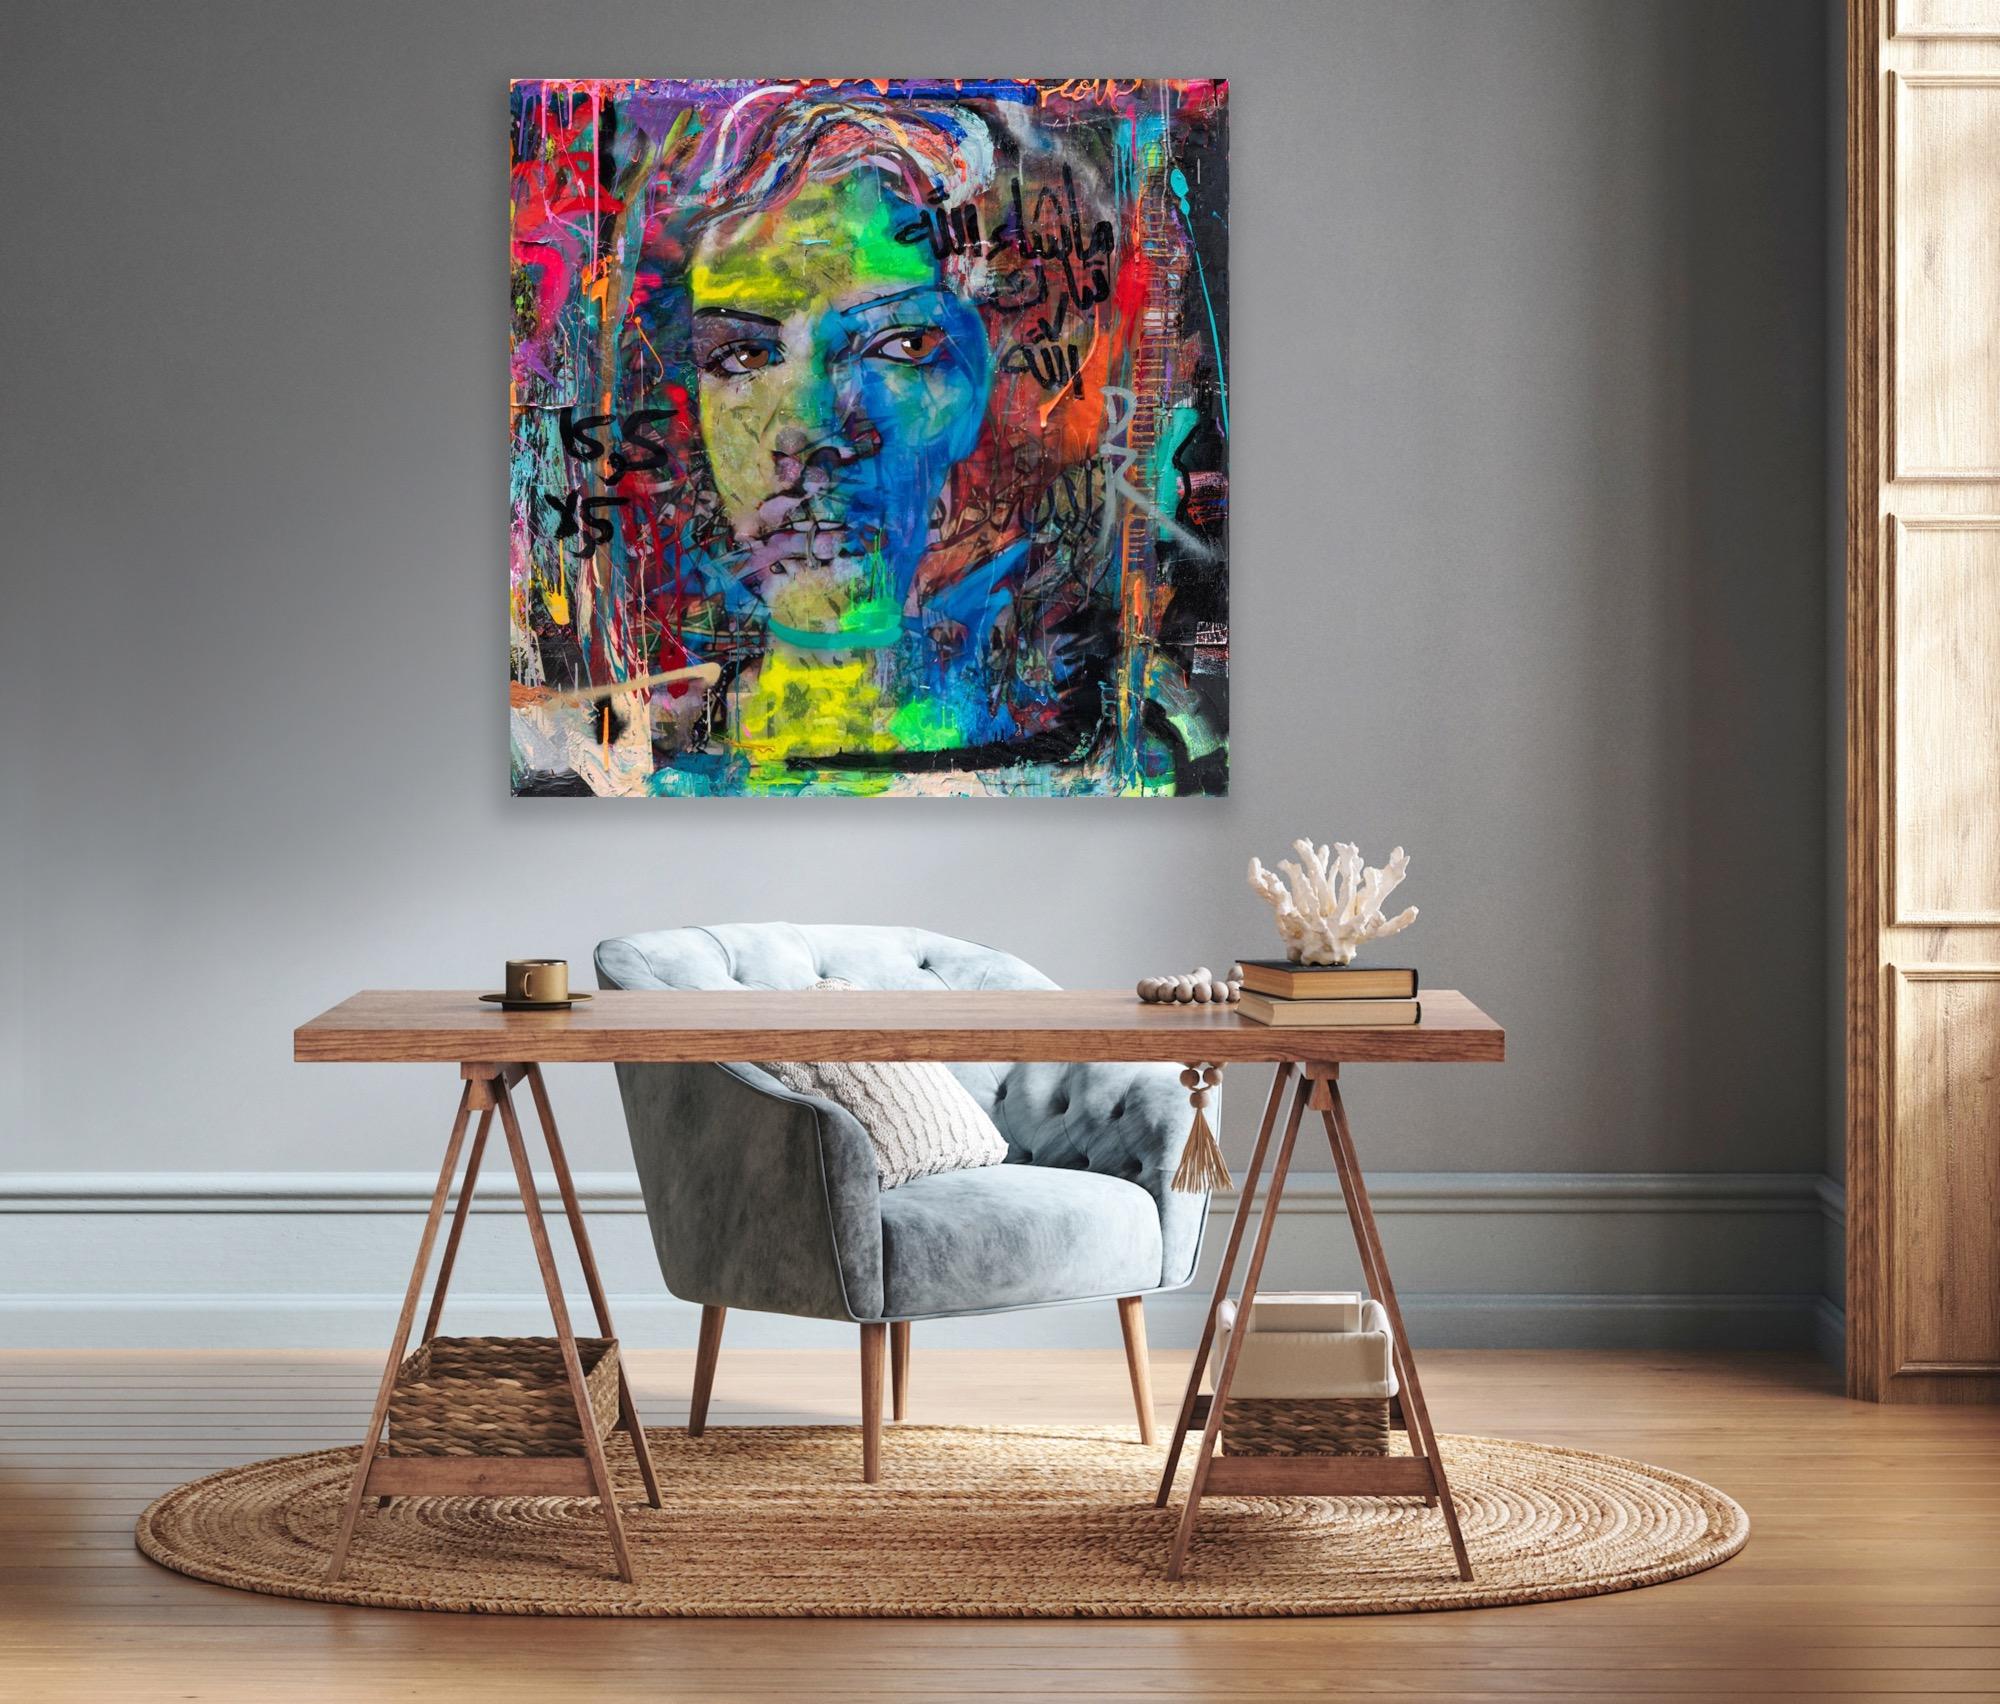 Omahyra, Bless Your Home - Outsider Art Mixed Media Art by Eddy Bogaert